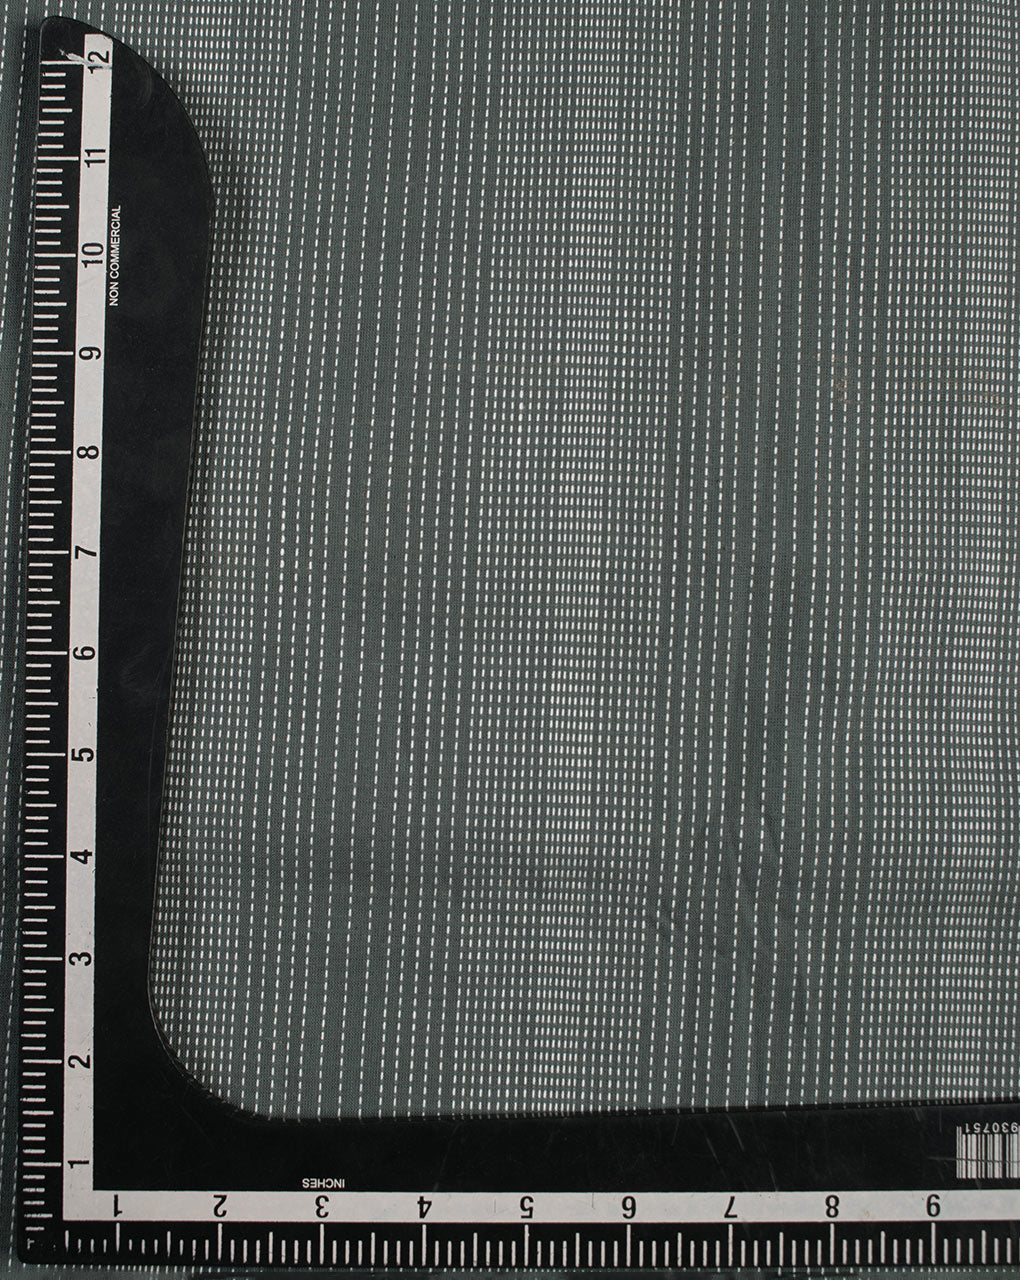 Loom Textured Kantha Cotton Fabric - Fabriclore.com